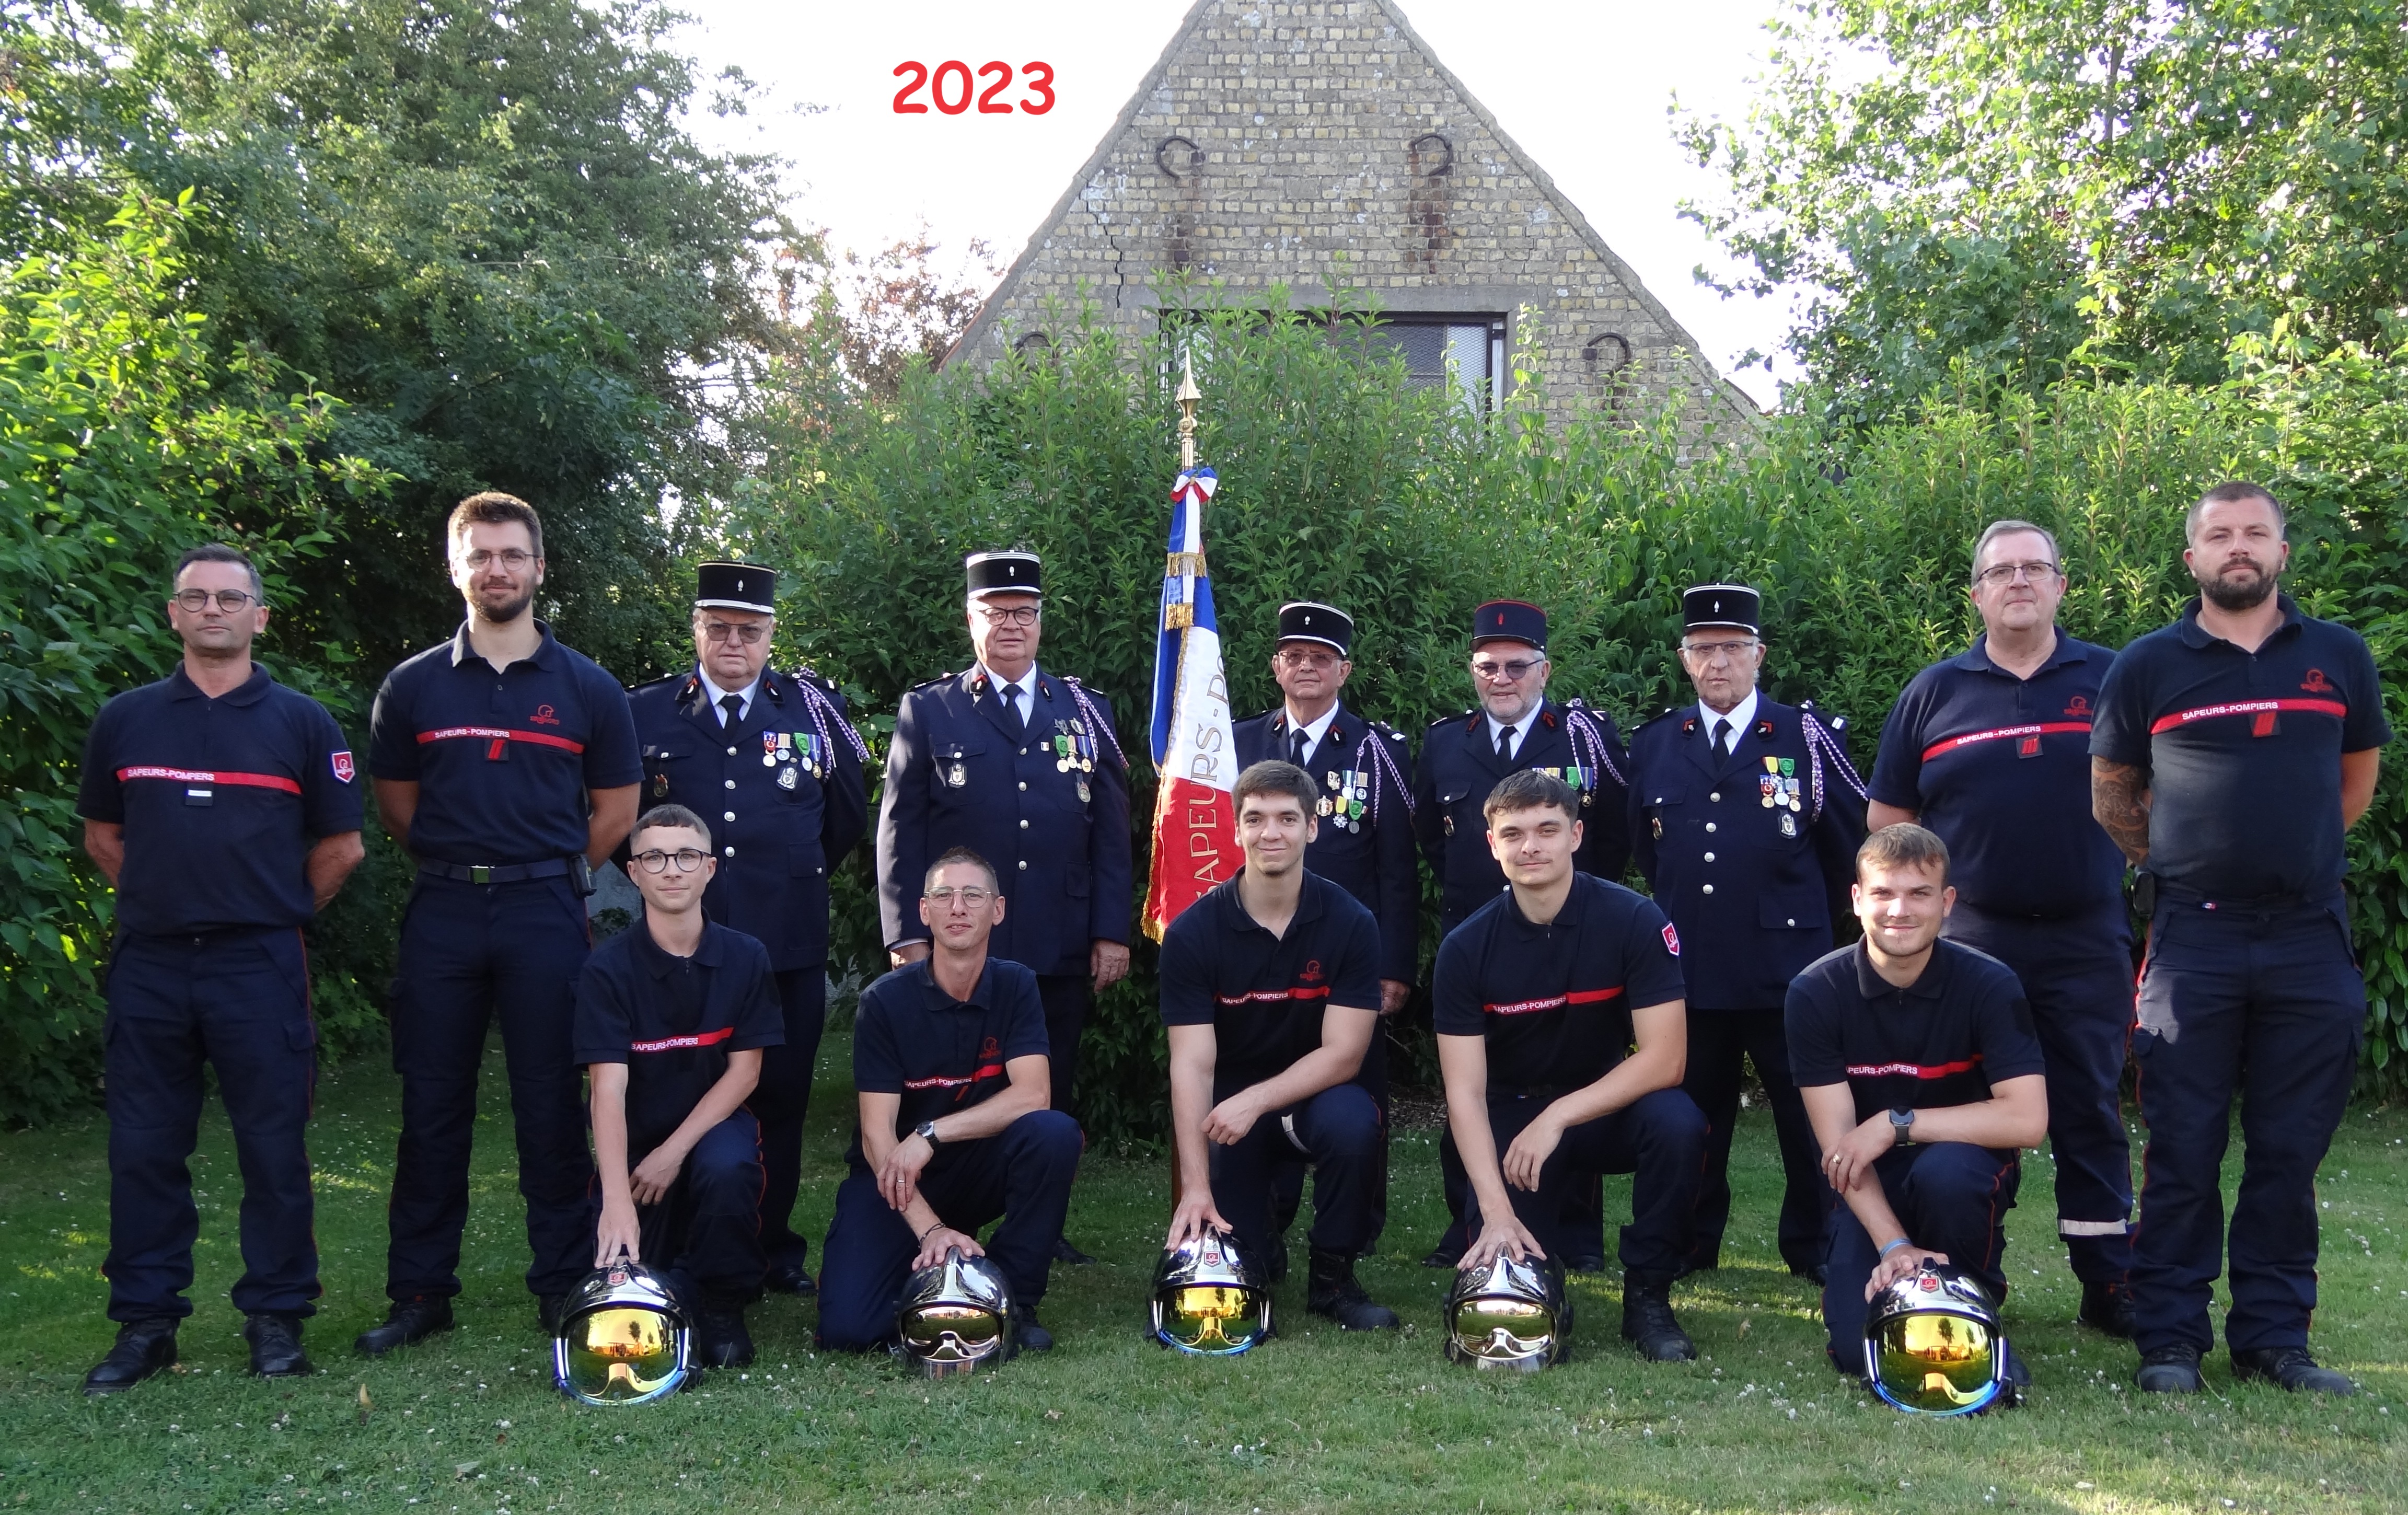 Pompiers_2023.JPG